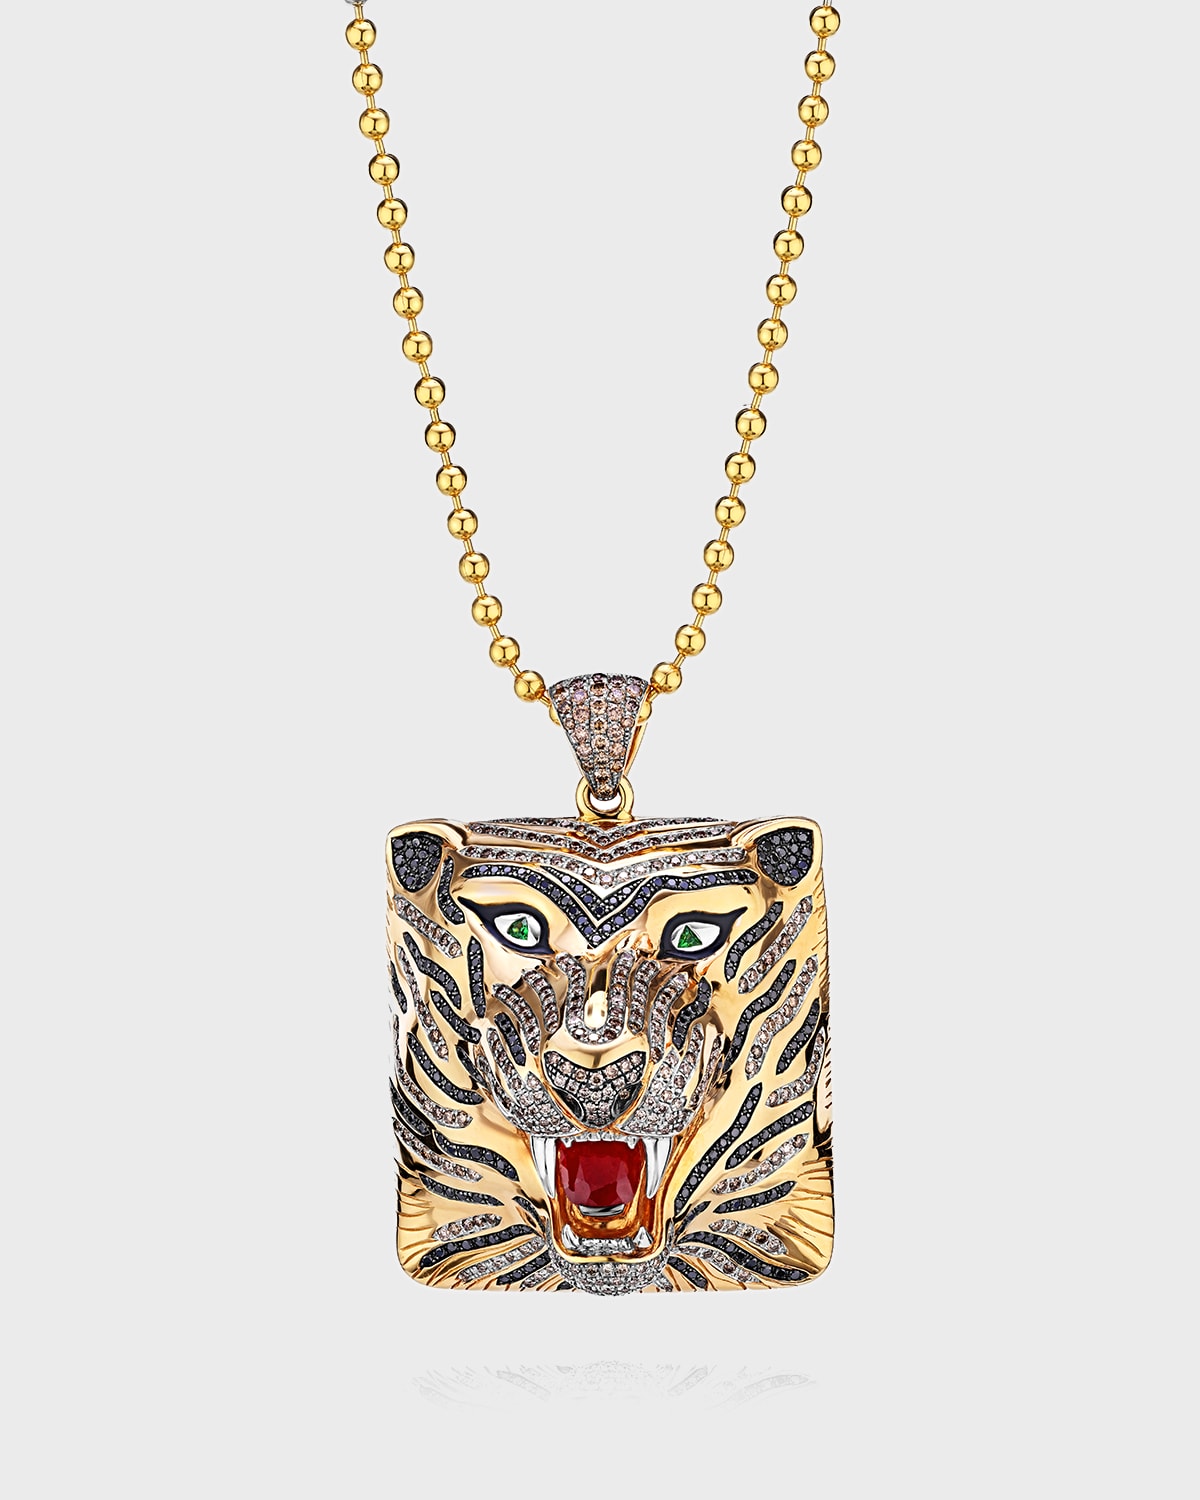 Alexander Laut 18k Diamond Tiger Pendant with Sapphires and Tsavorite